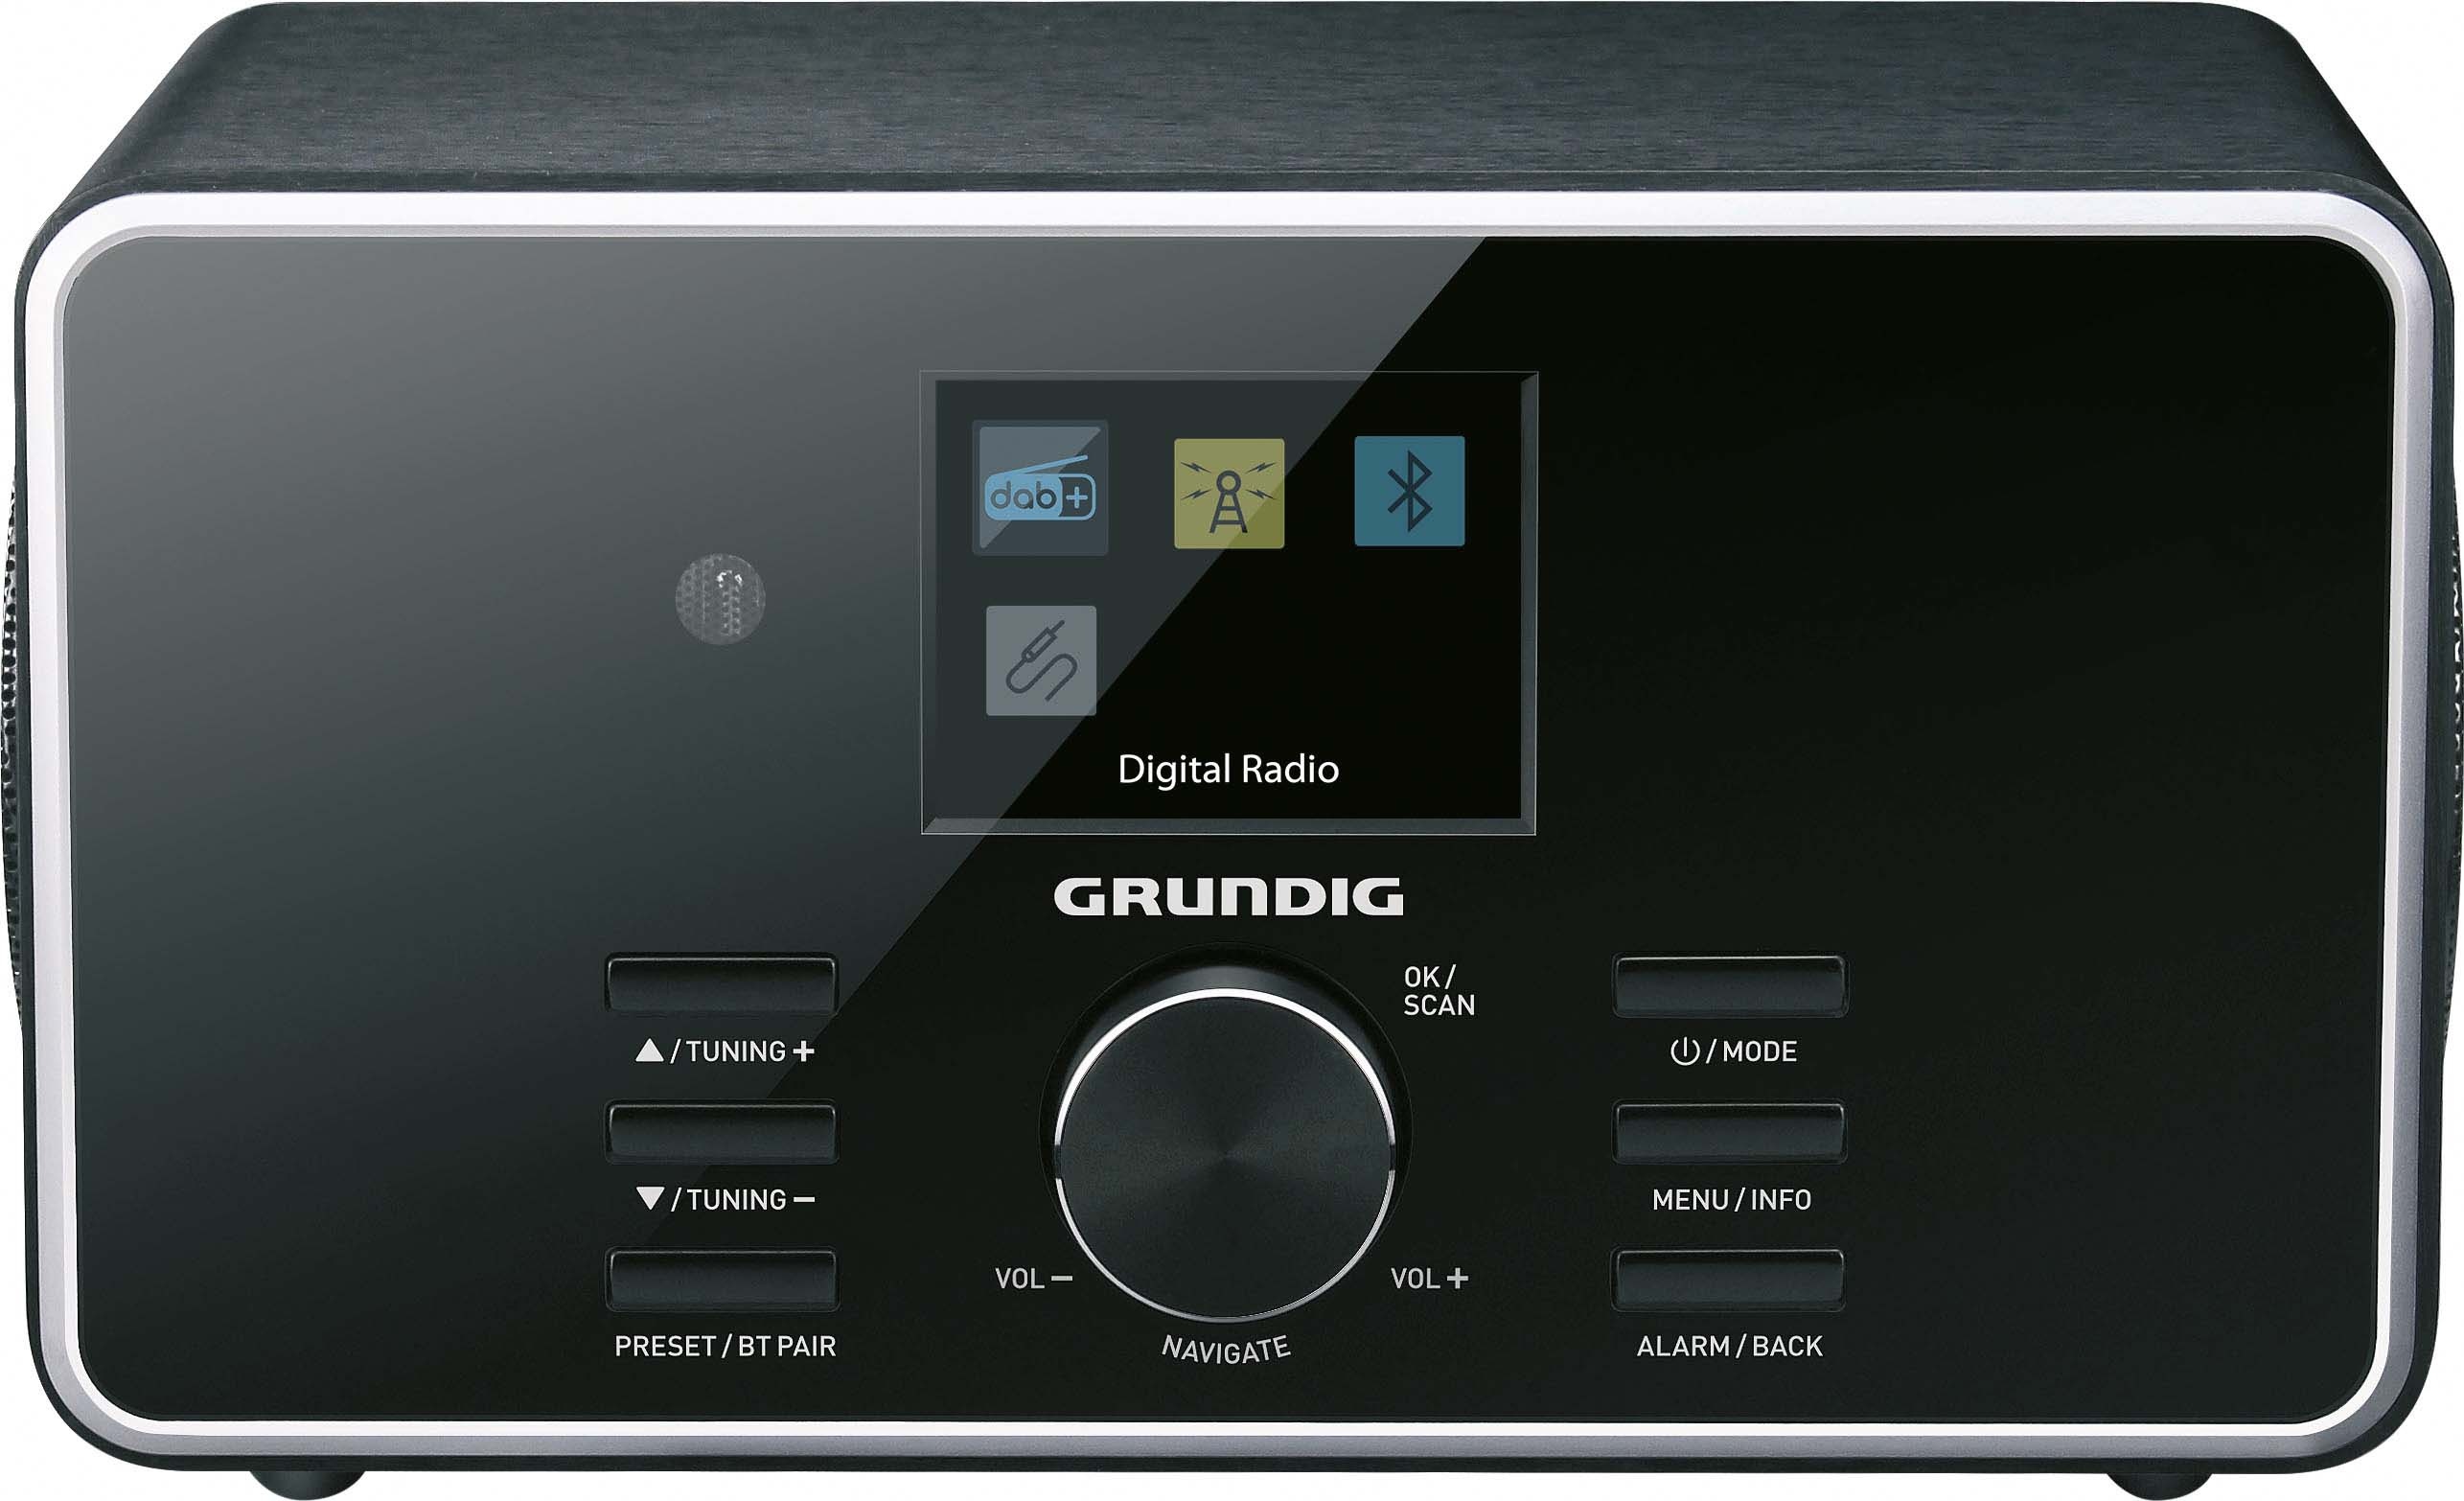 Grundig Dtr 4500 2.0 (FM, DAB+, Bluetooth), Radio, Schwarz